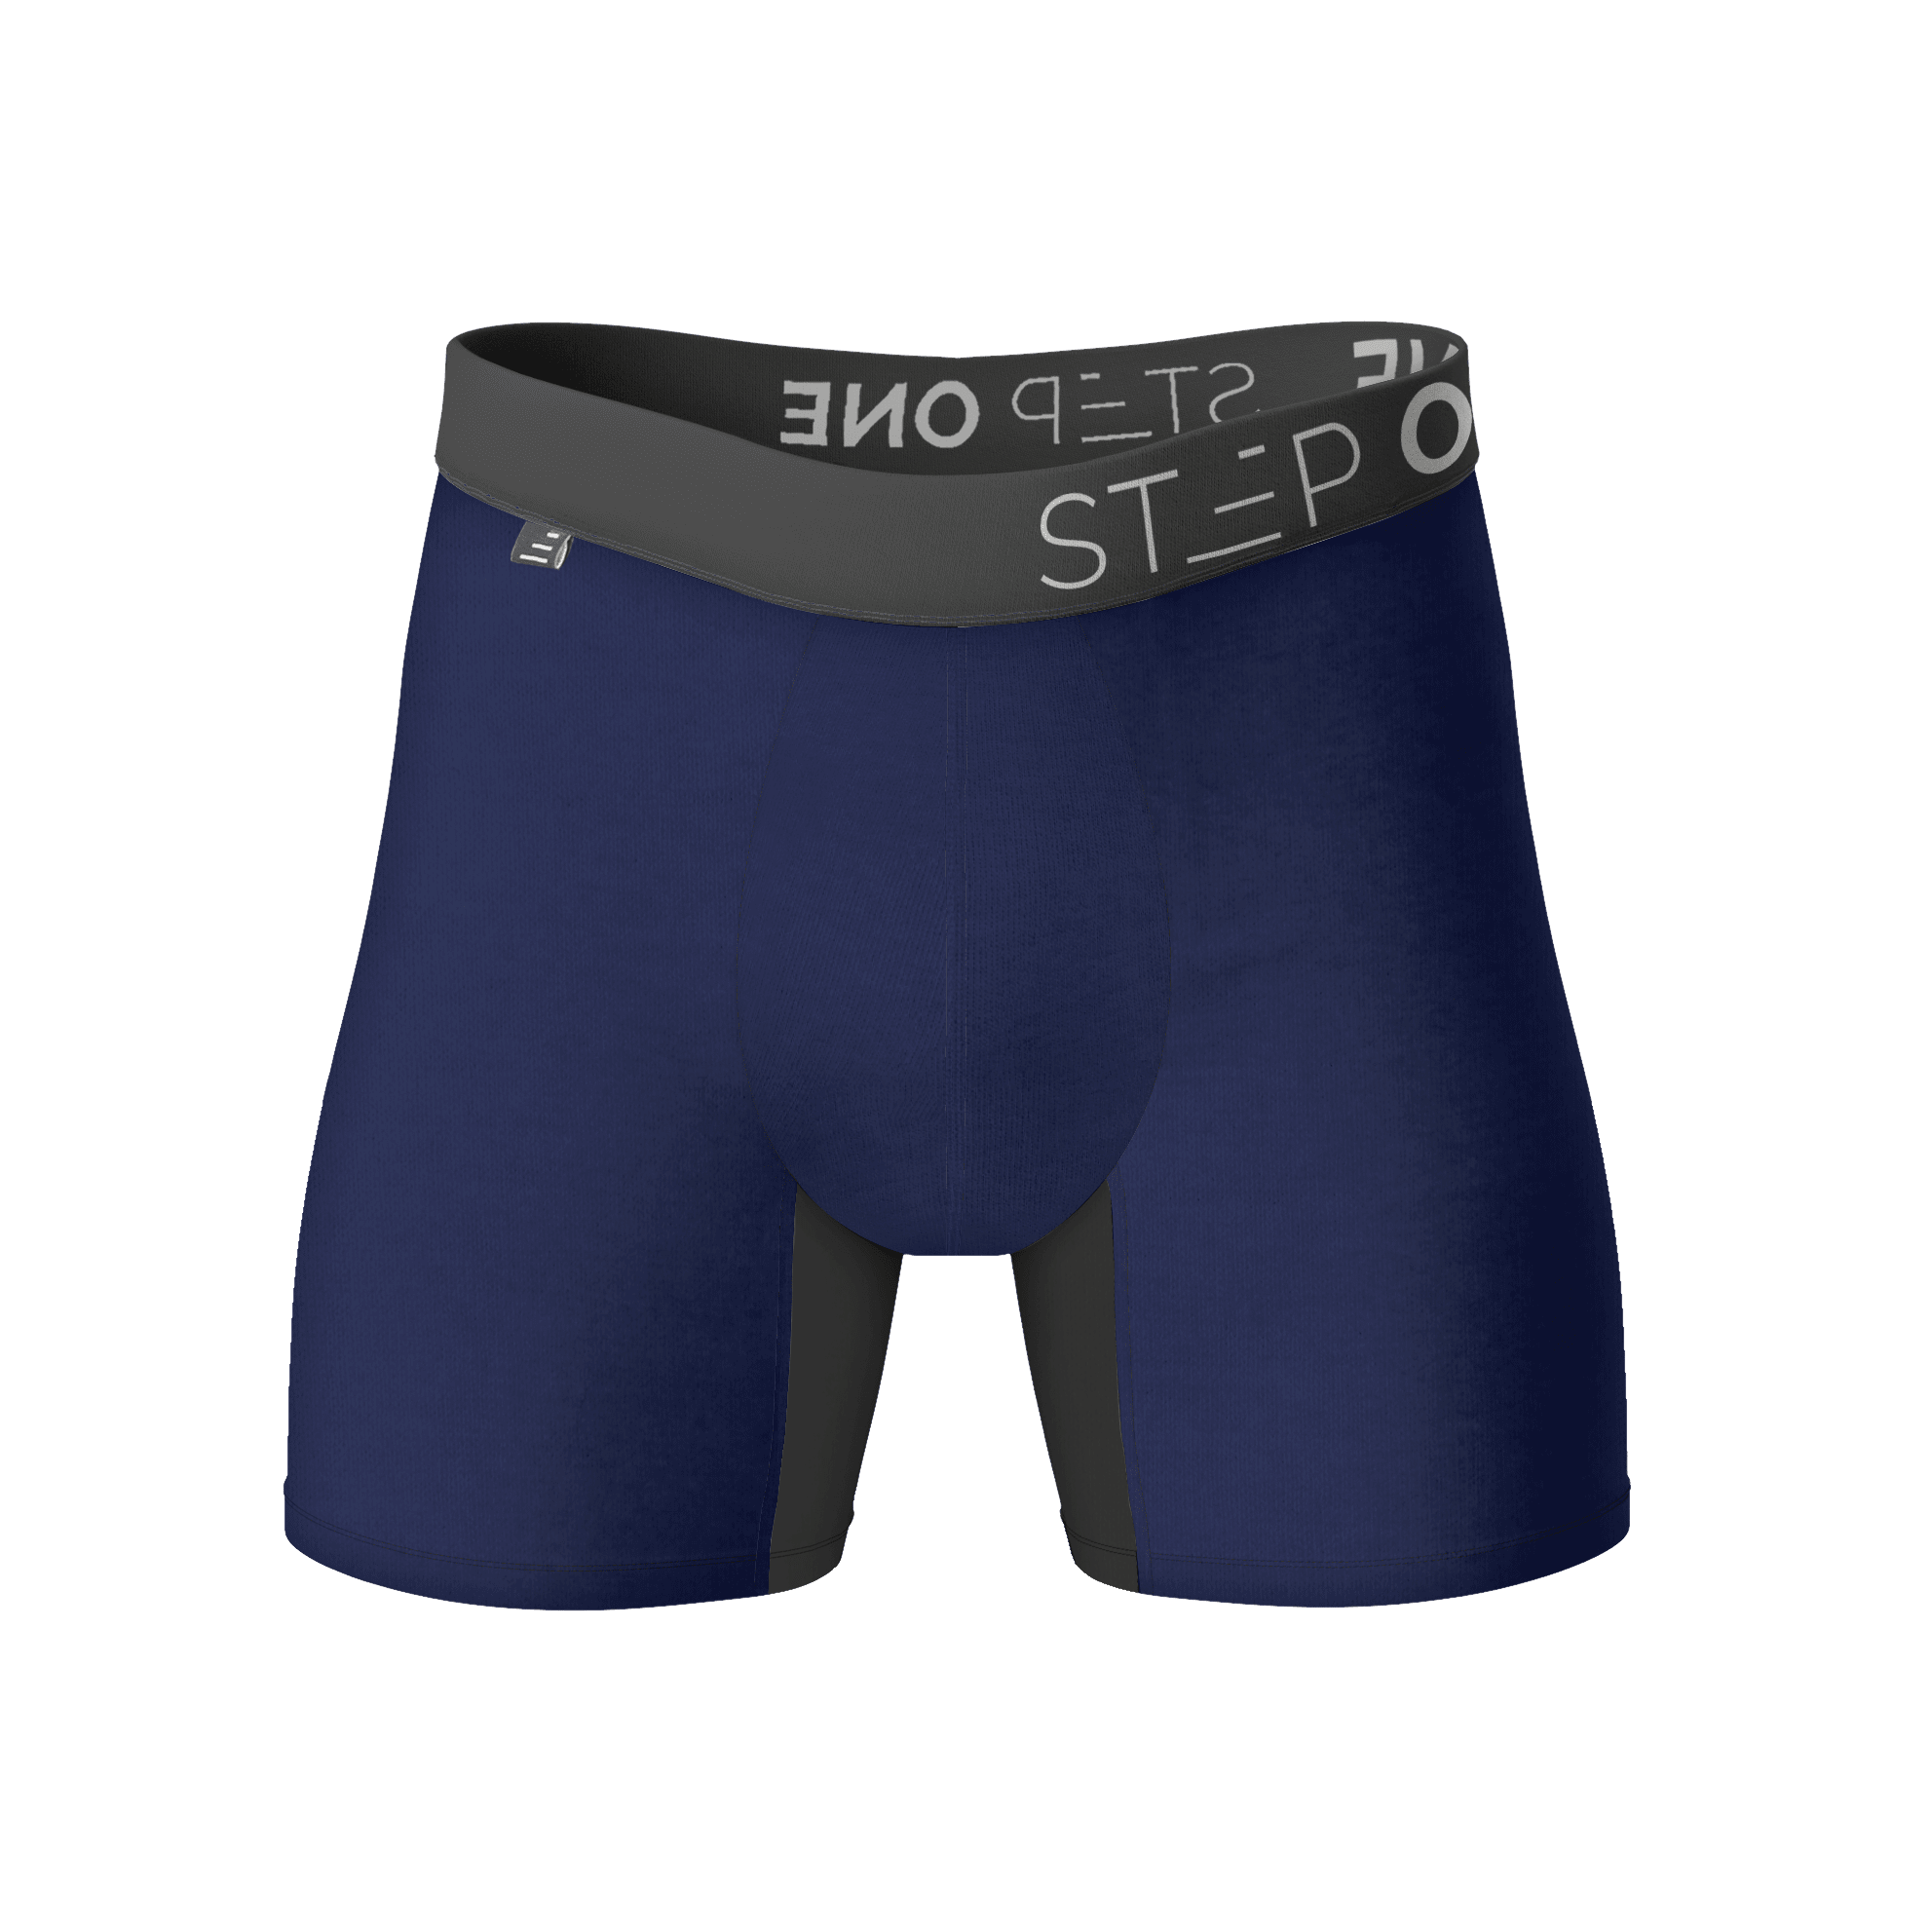 Men's Underwear. Find Boxers, Briefs & Boxer Briefs for Men in Unique Prices, Offers, Stock